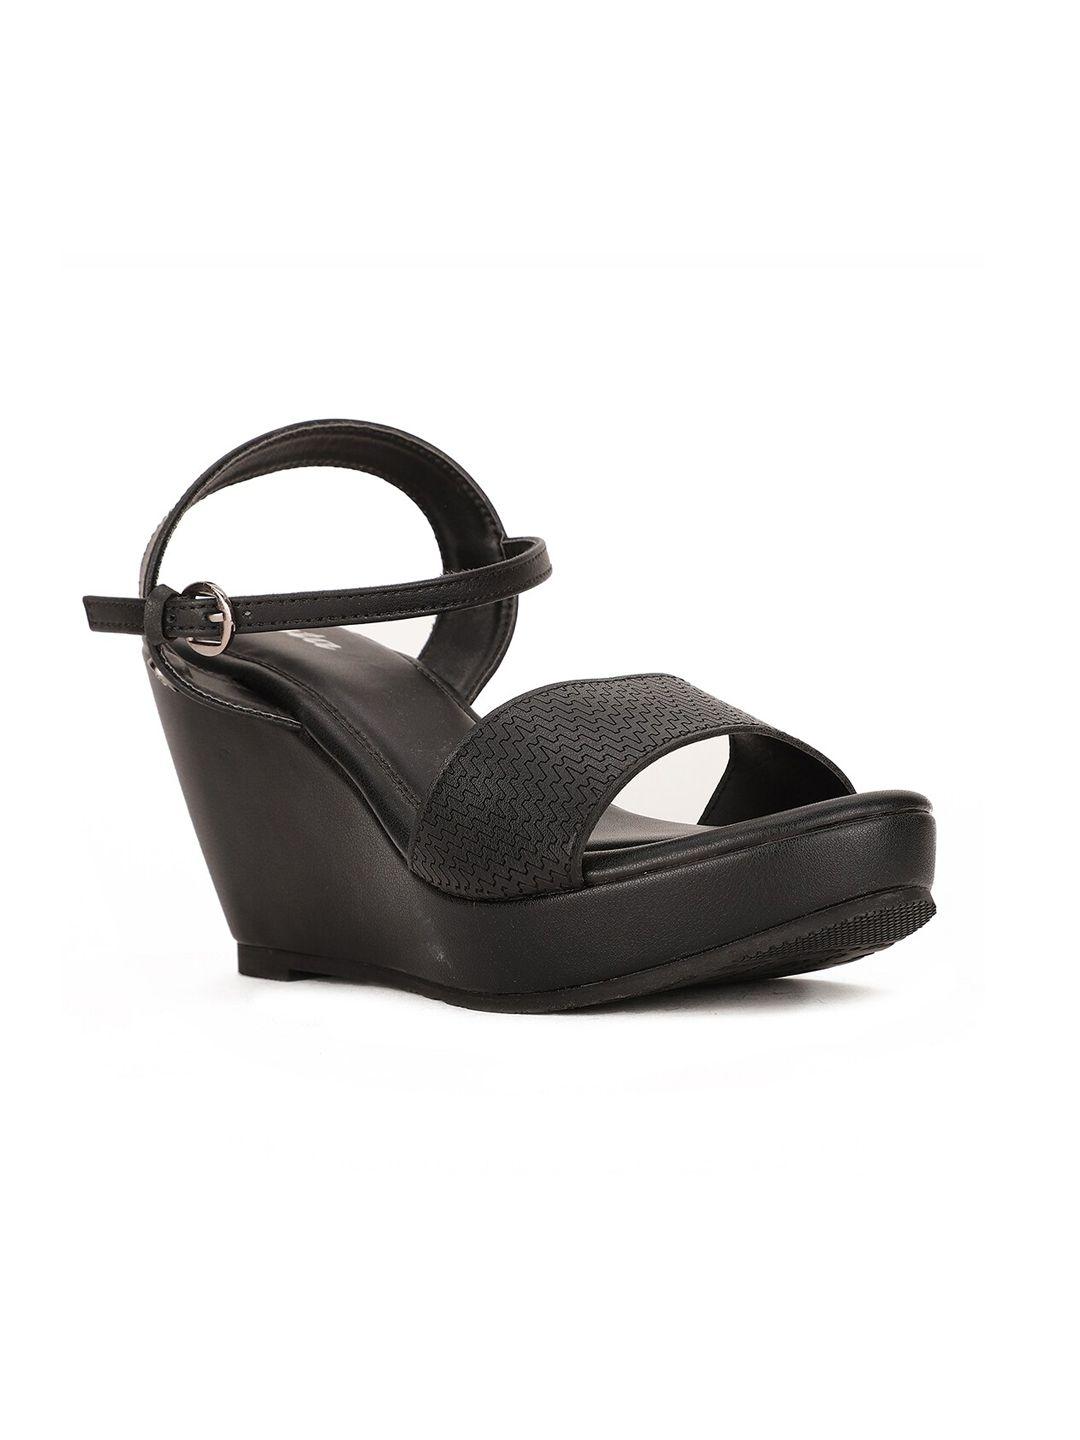 bata-black-wedge-with-buckle-heels